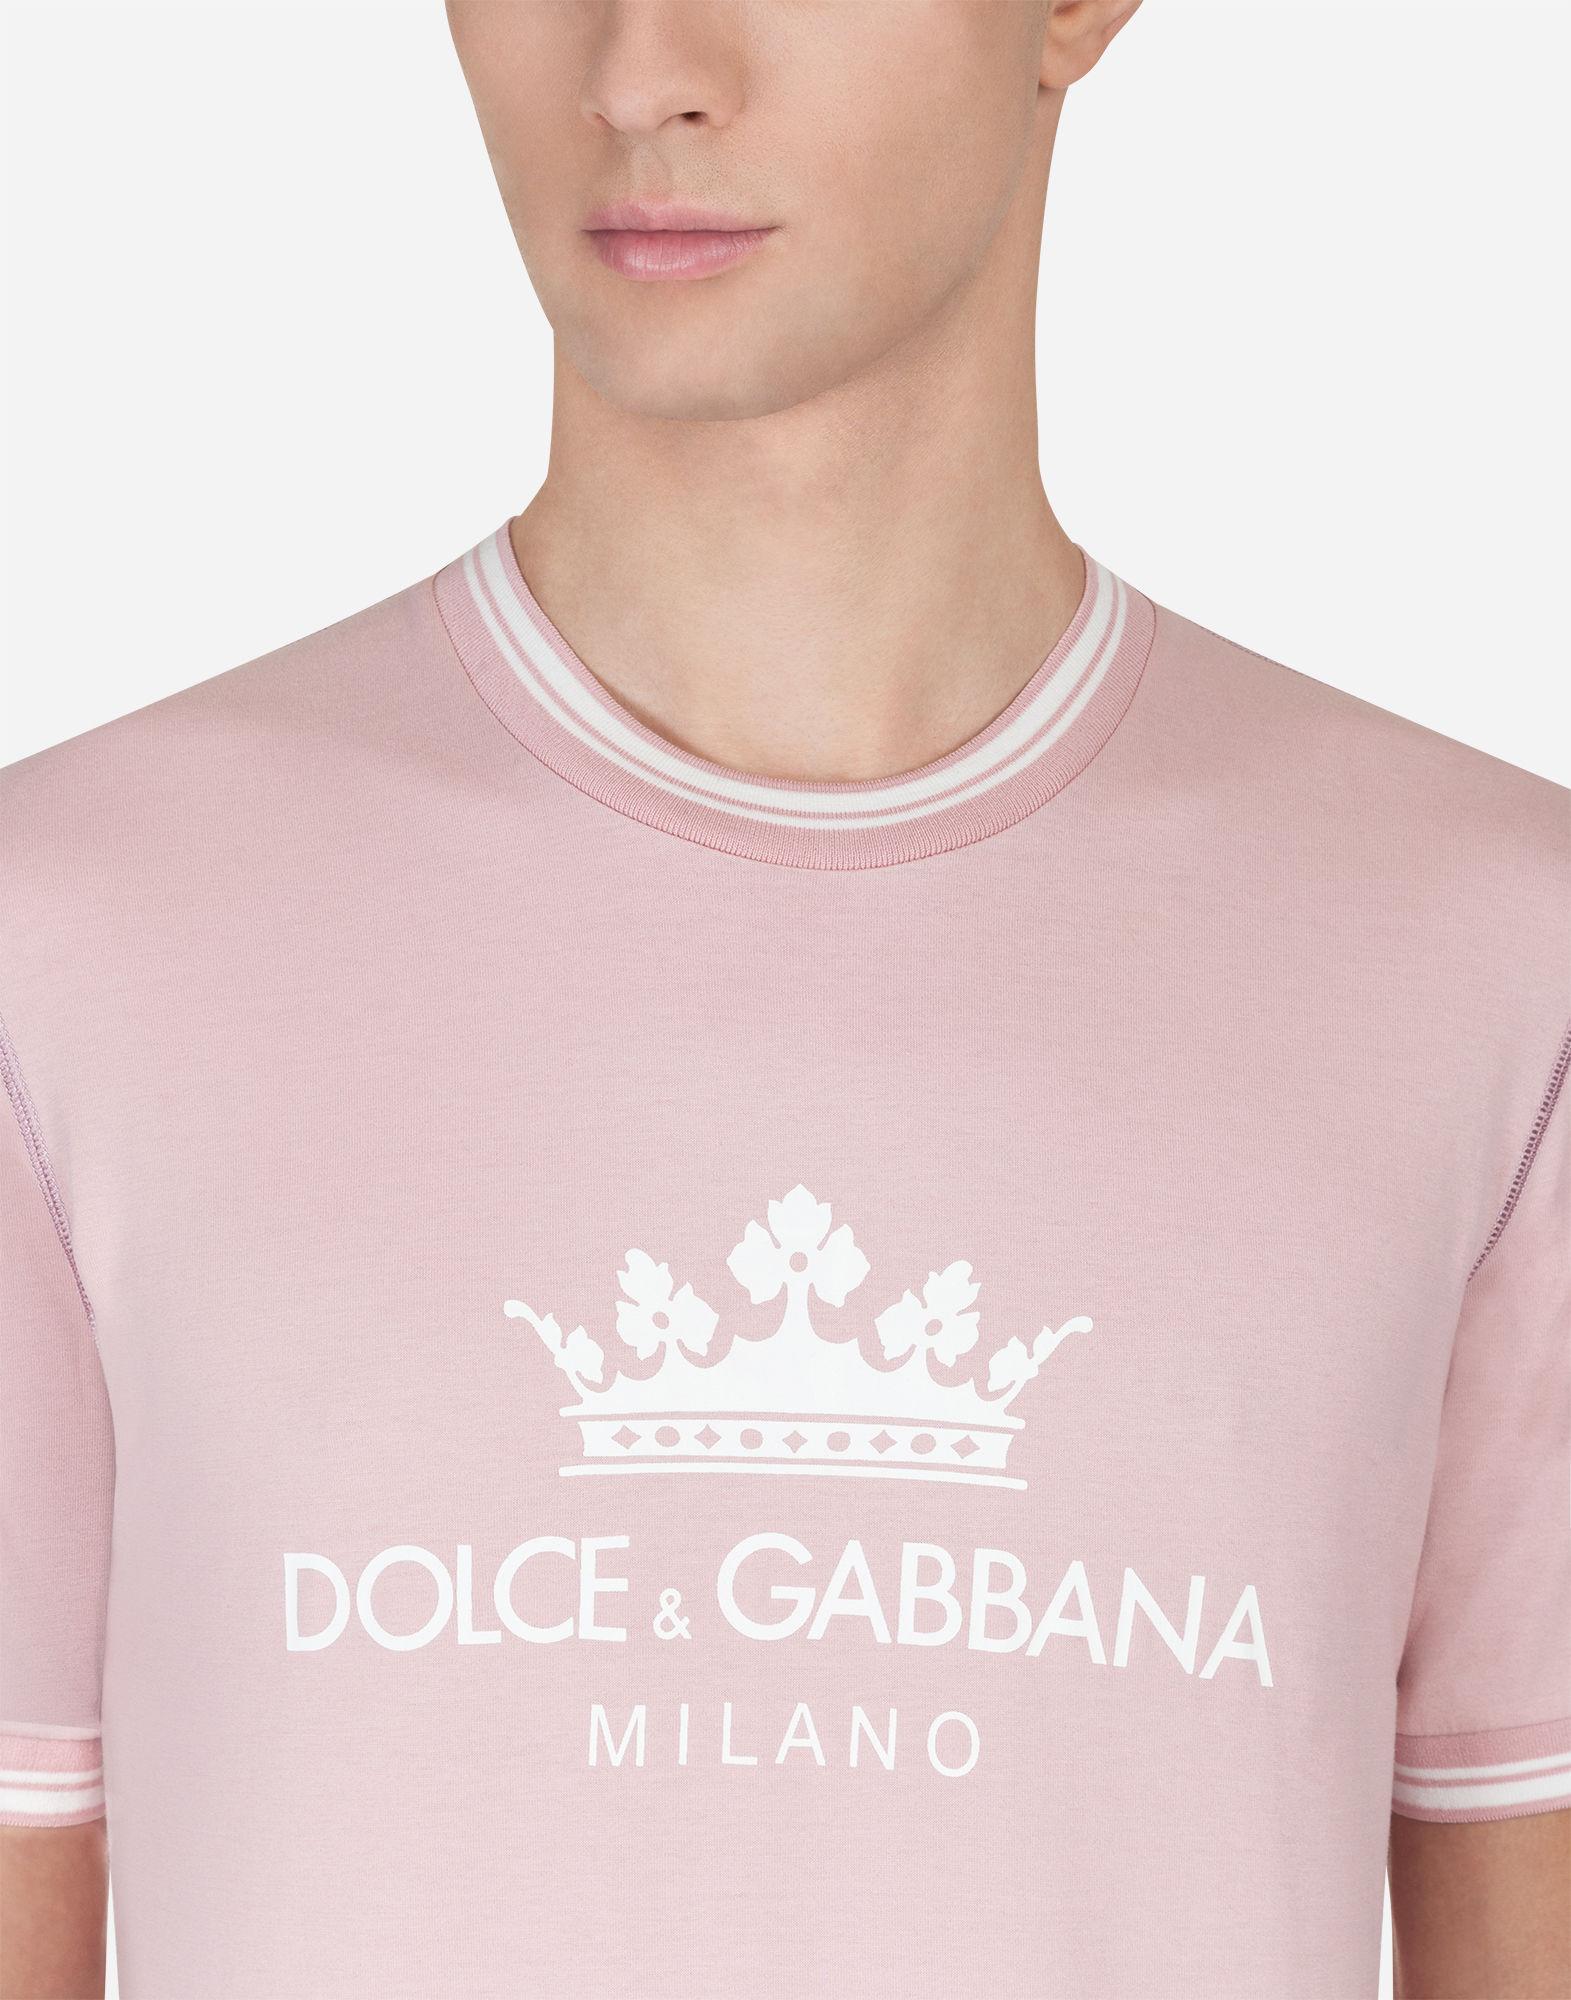 dolce and gabbana pink t shirt